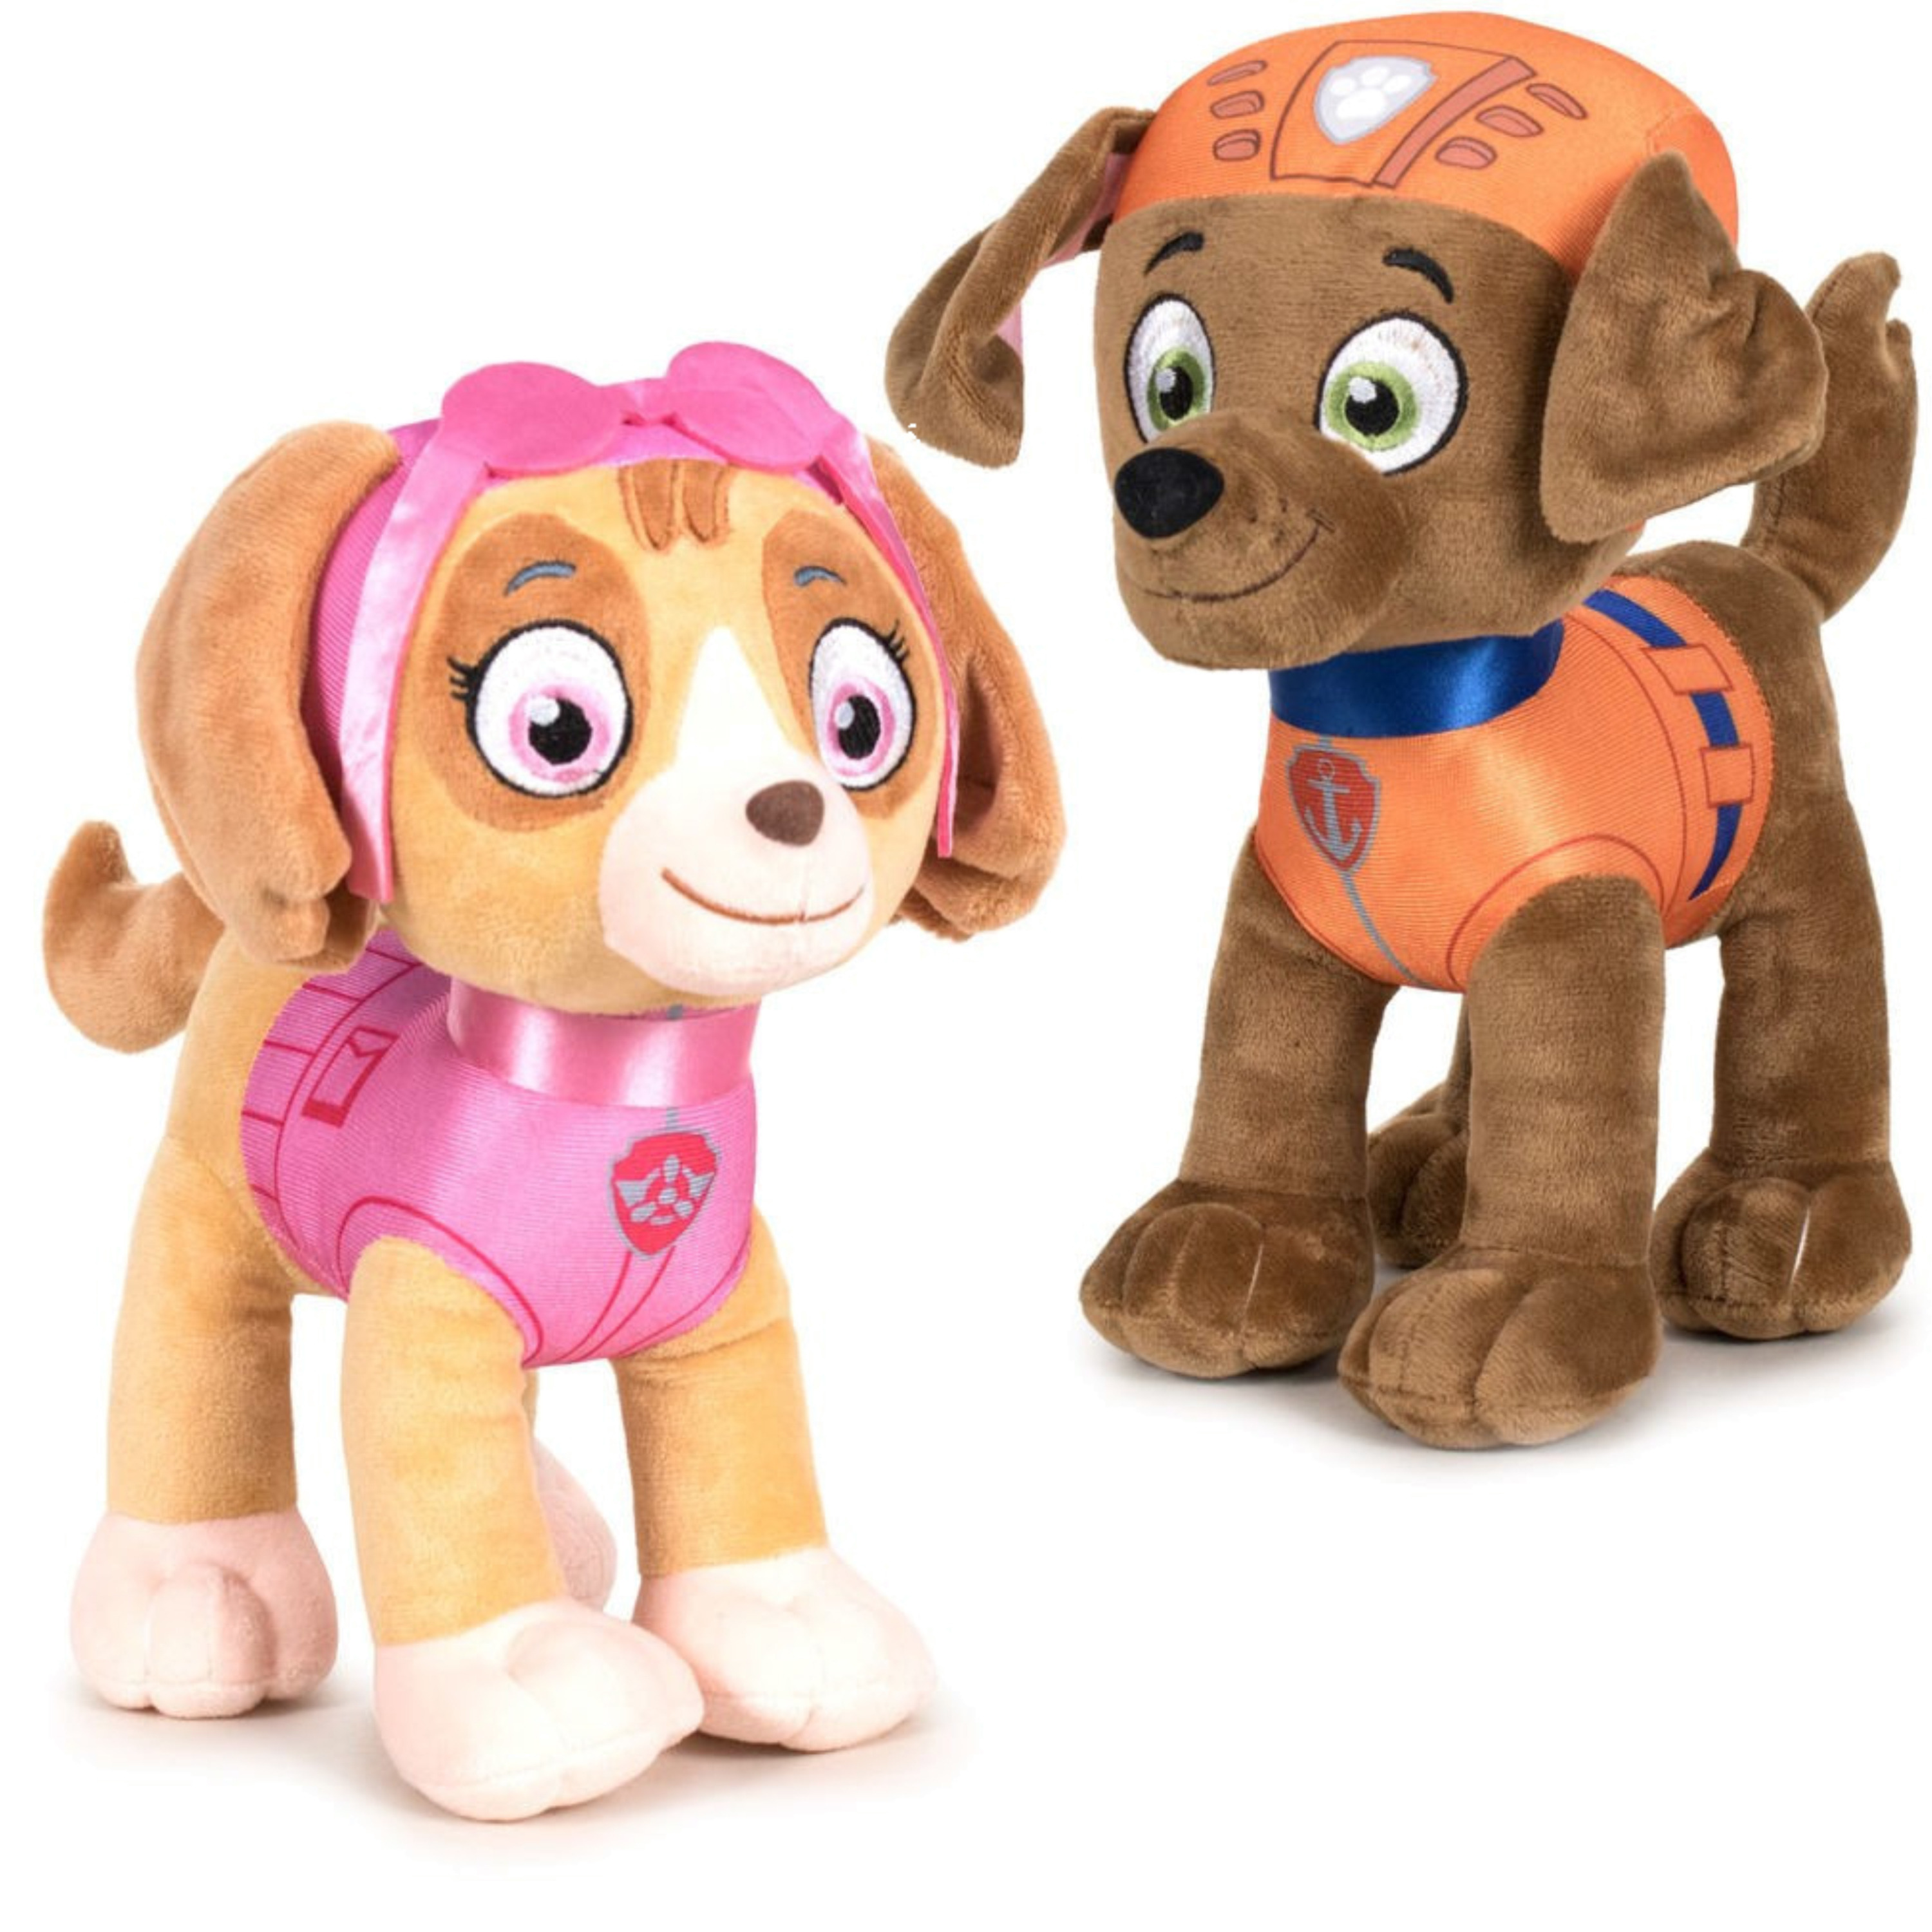 Paw Patrol figuren speelgoed knuffels set van 2x karakters Zuma en Skye 19 cm